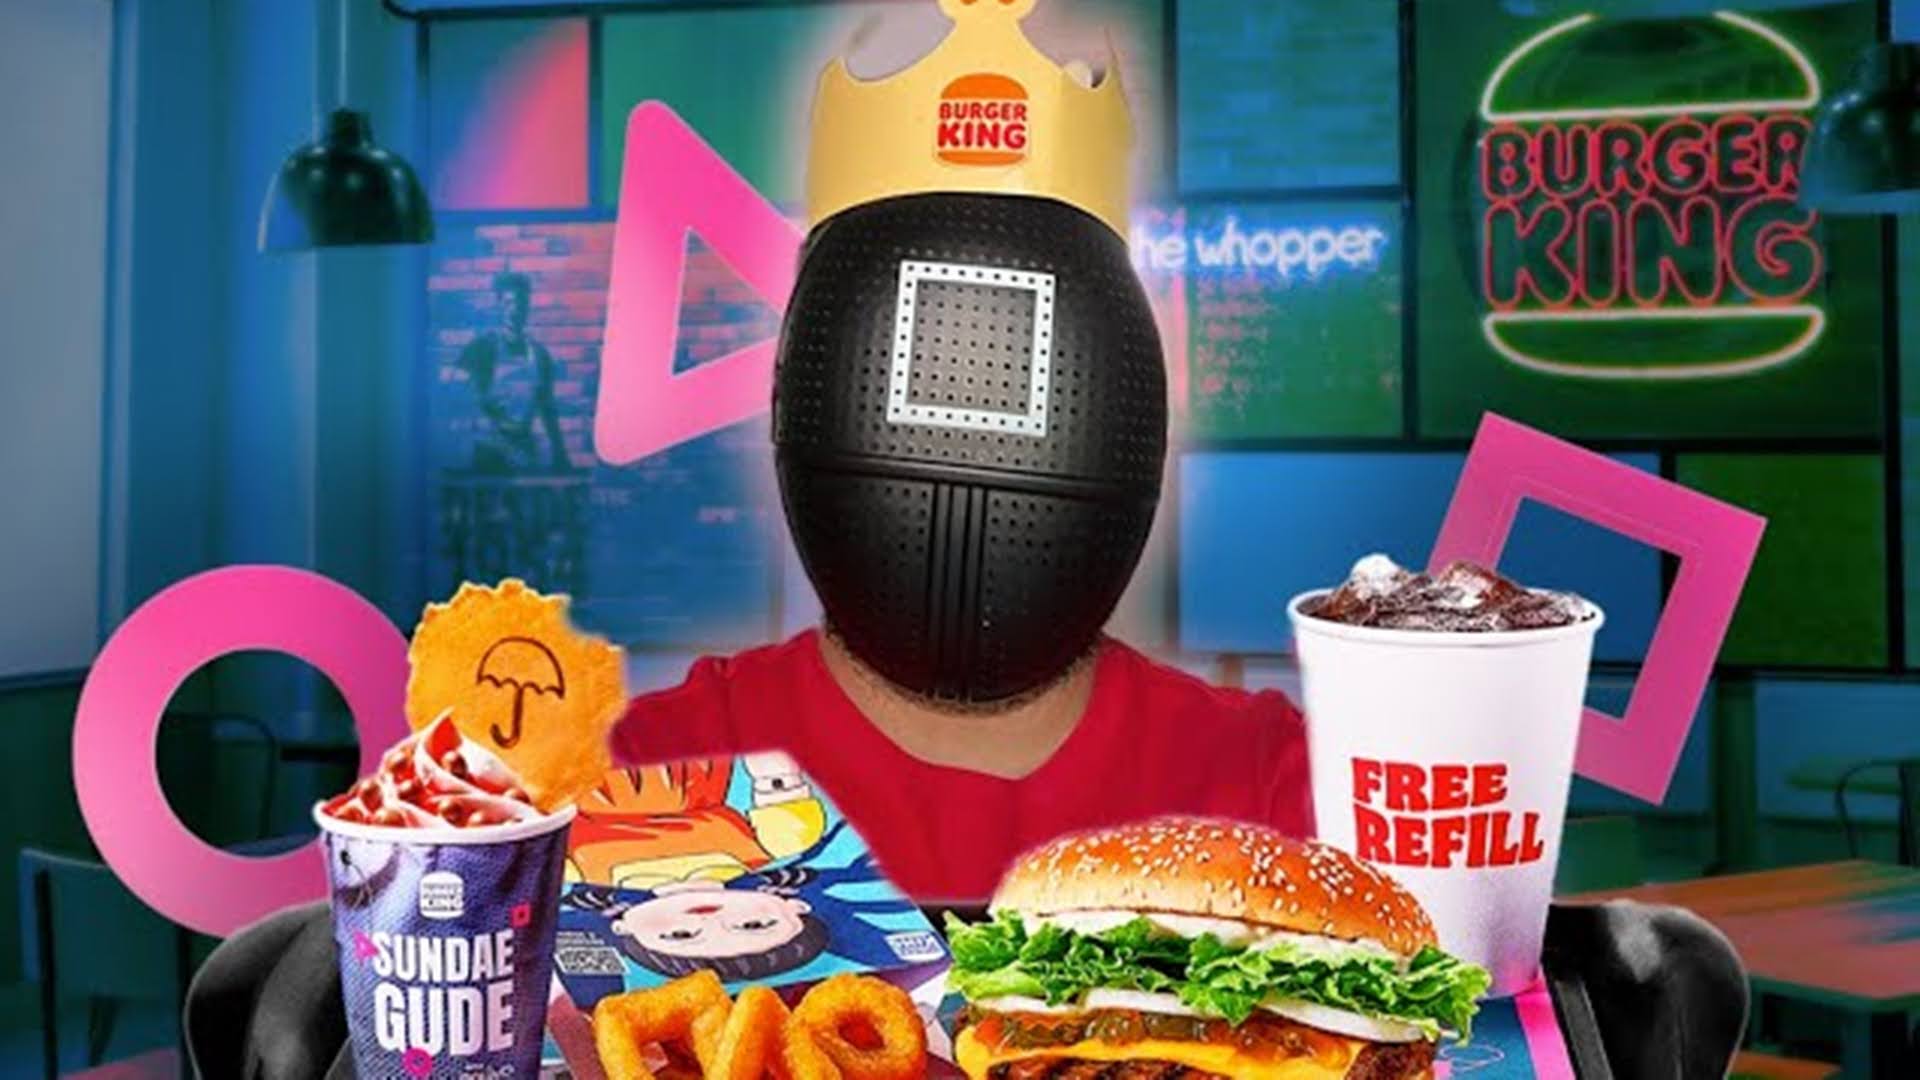 O reality Round 6: O Desafio já - Burger King Brasil